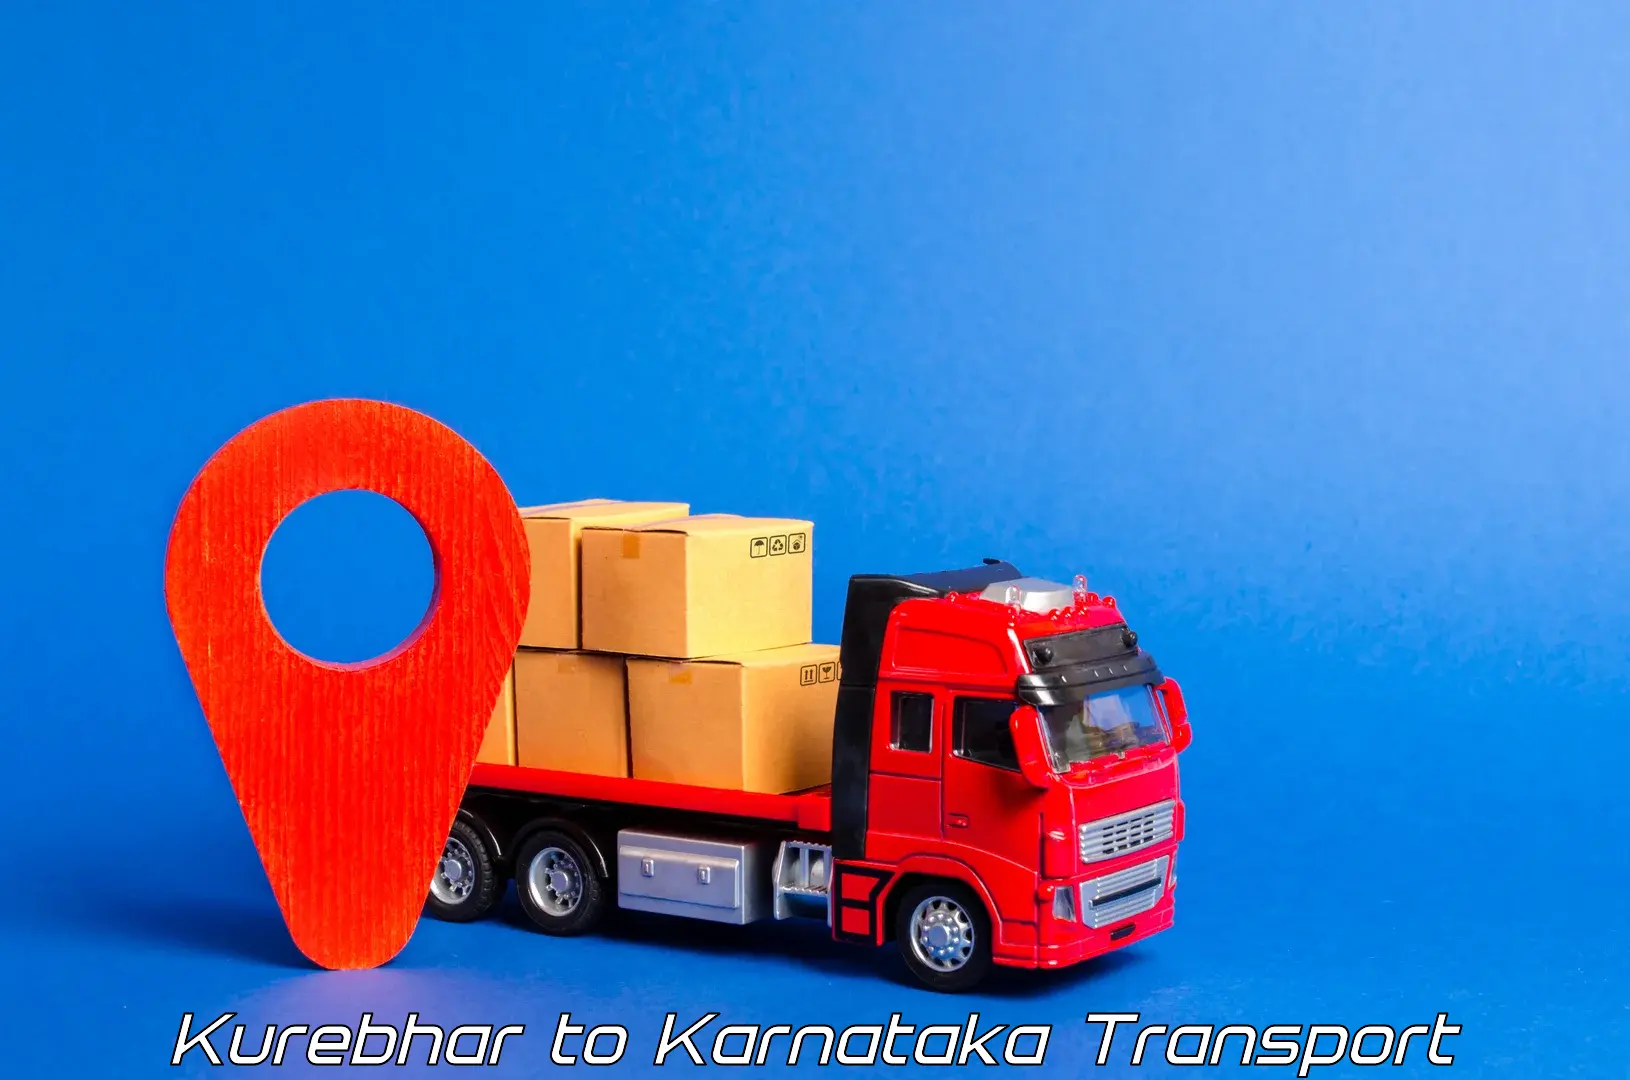 Nearby transport service Kurebhar to Karnataka